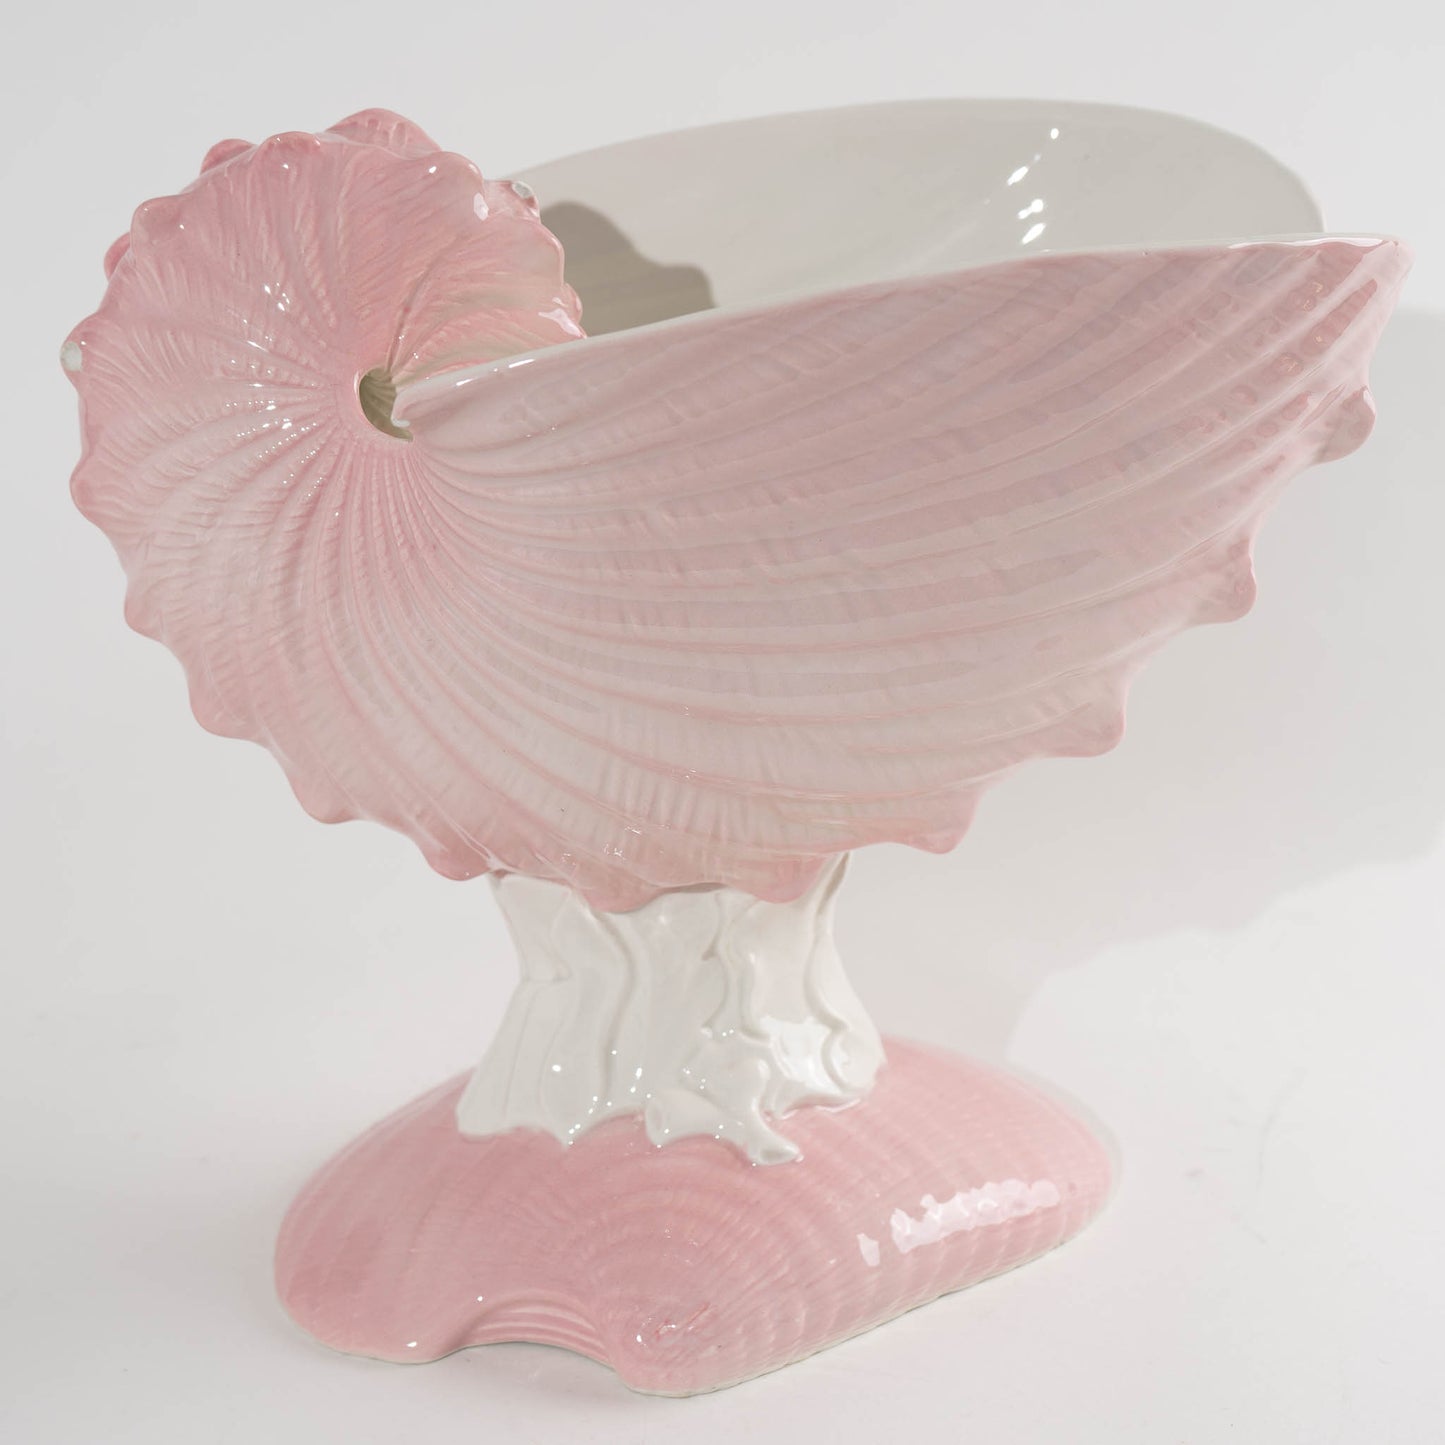 Vintage Italian Majolica Ceramic Sea Shell Vase  Pink and white coastal